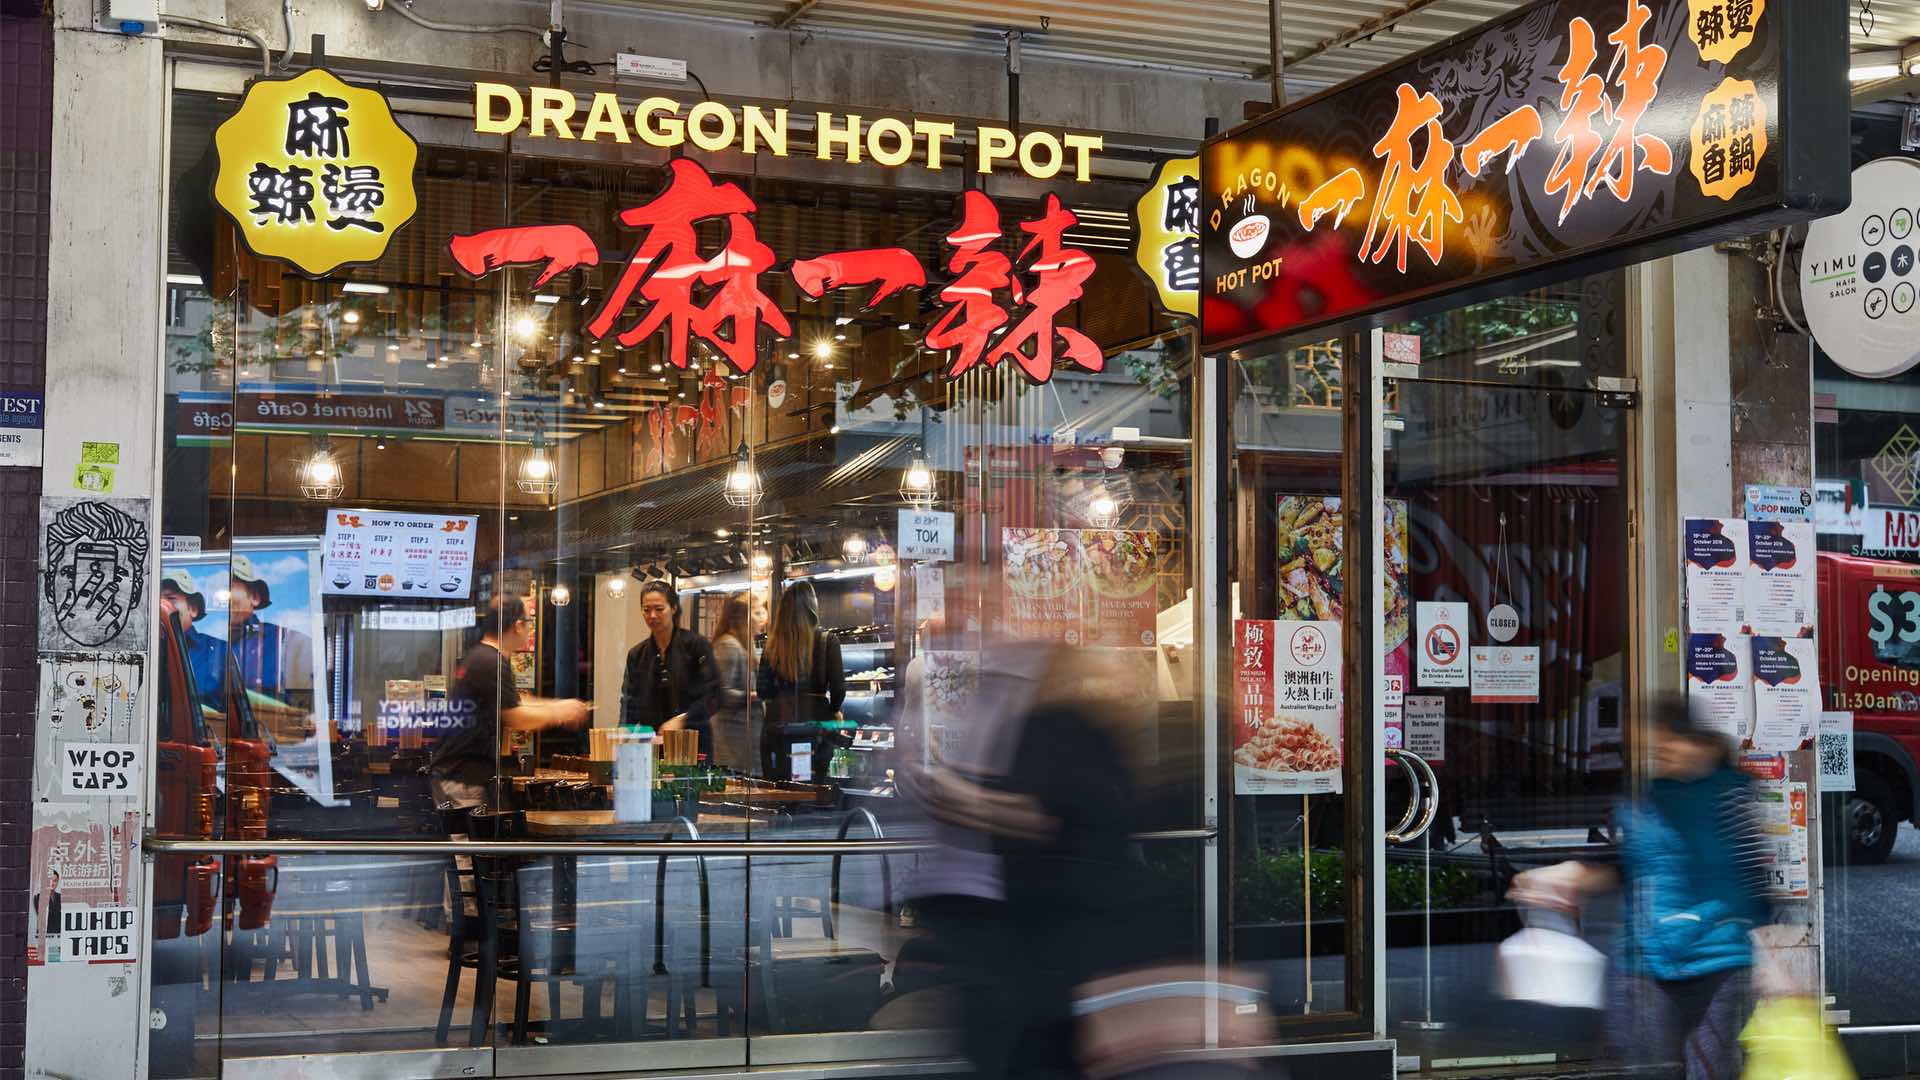 The Dragon Hot Pot Restaurant in Melbourne - best hot pot in Melbourne